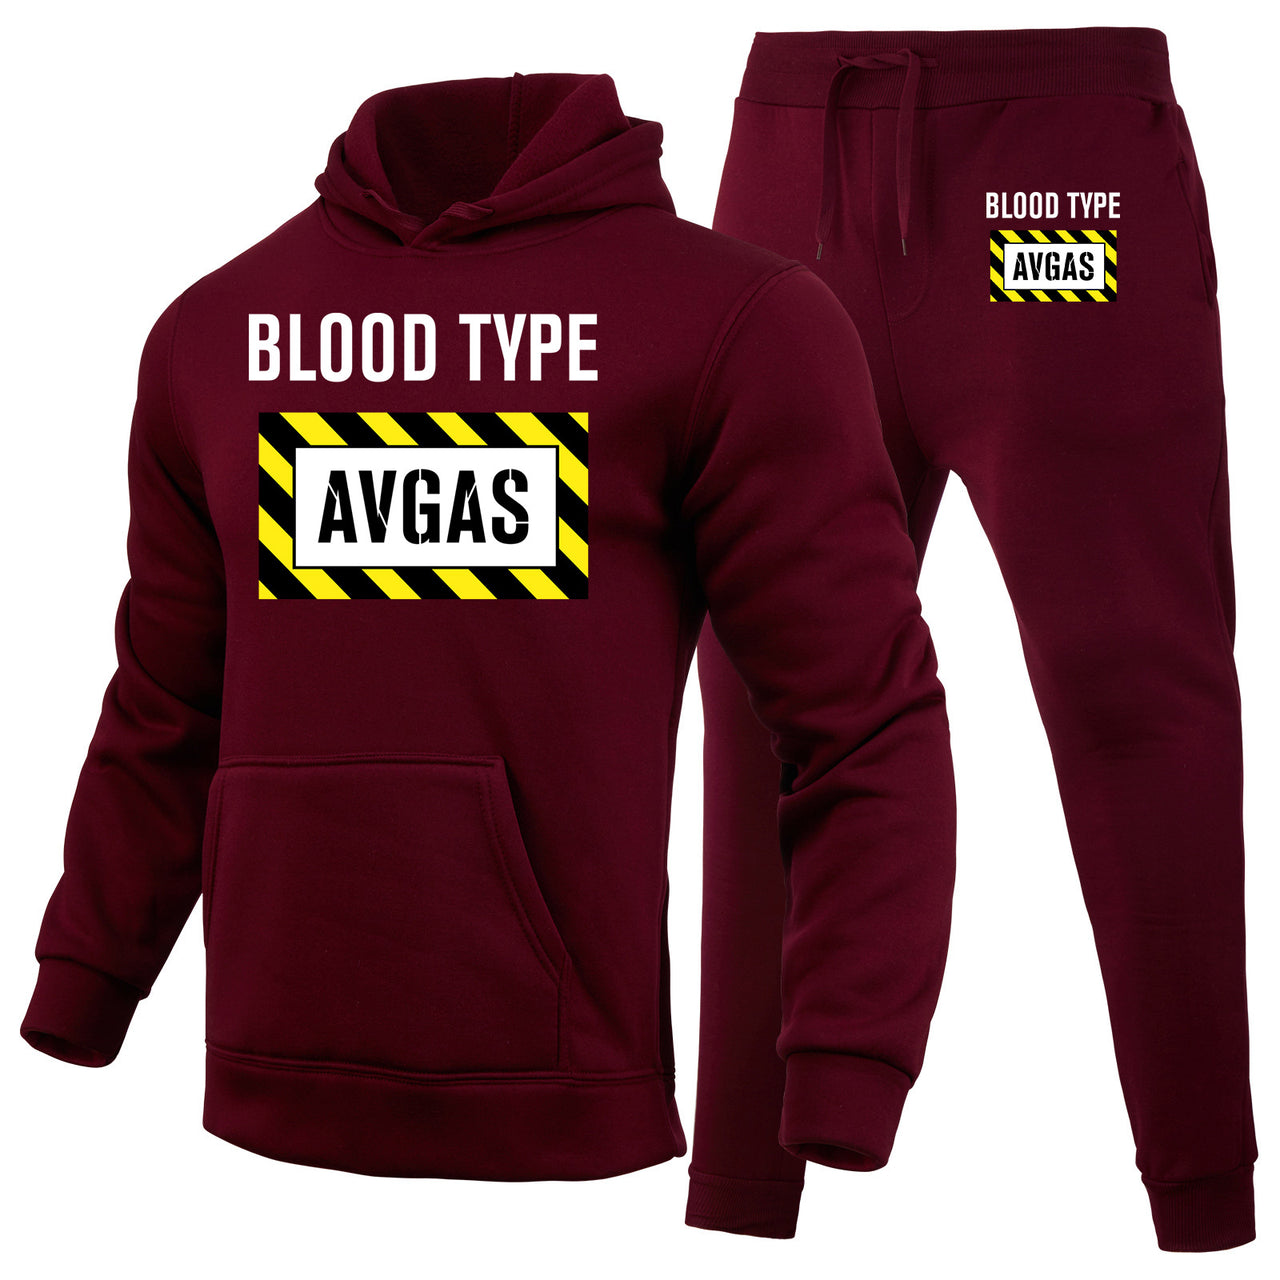 Blood Type AVGAS Designed Hoodies & Sweatpants Set